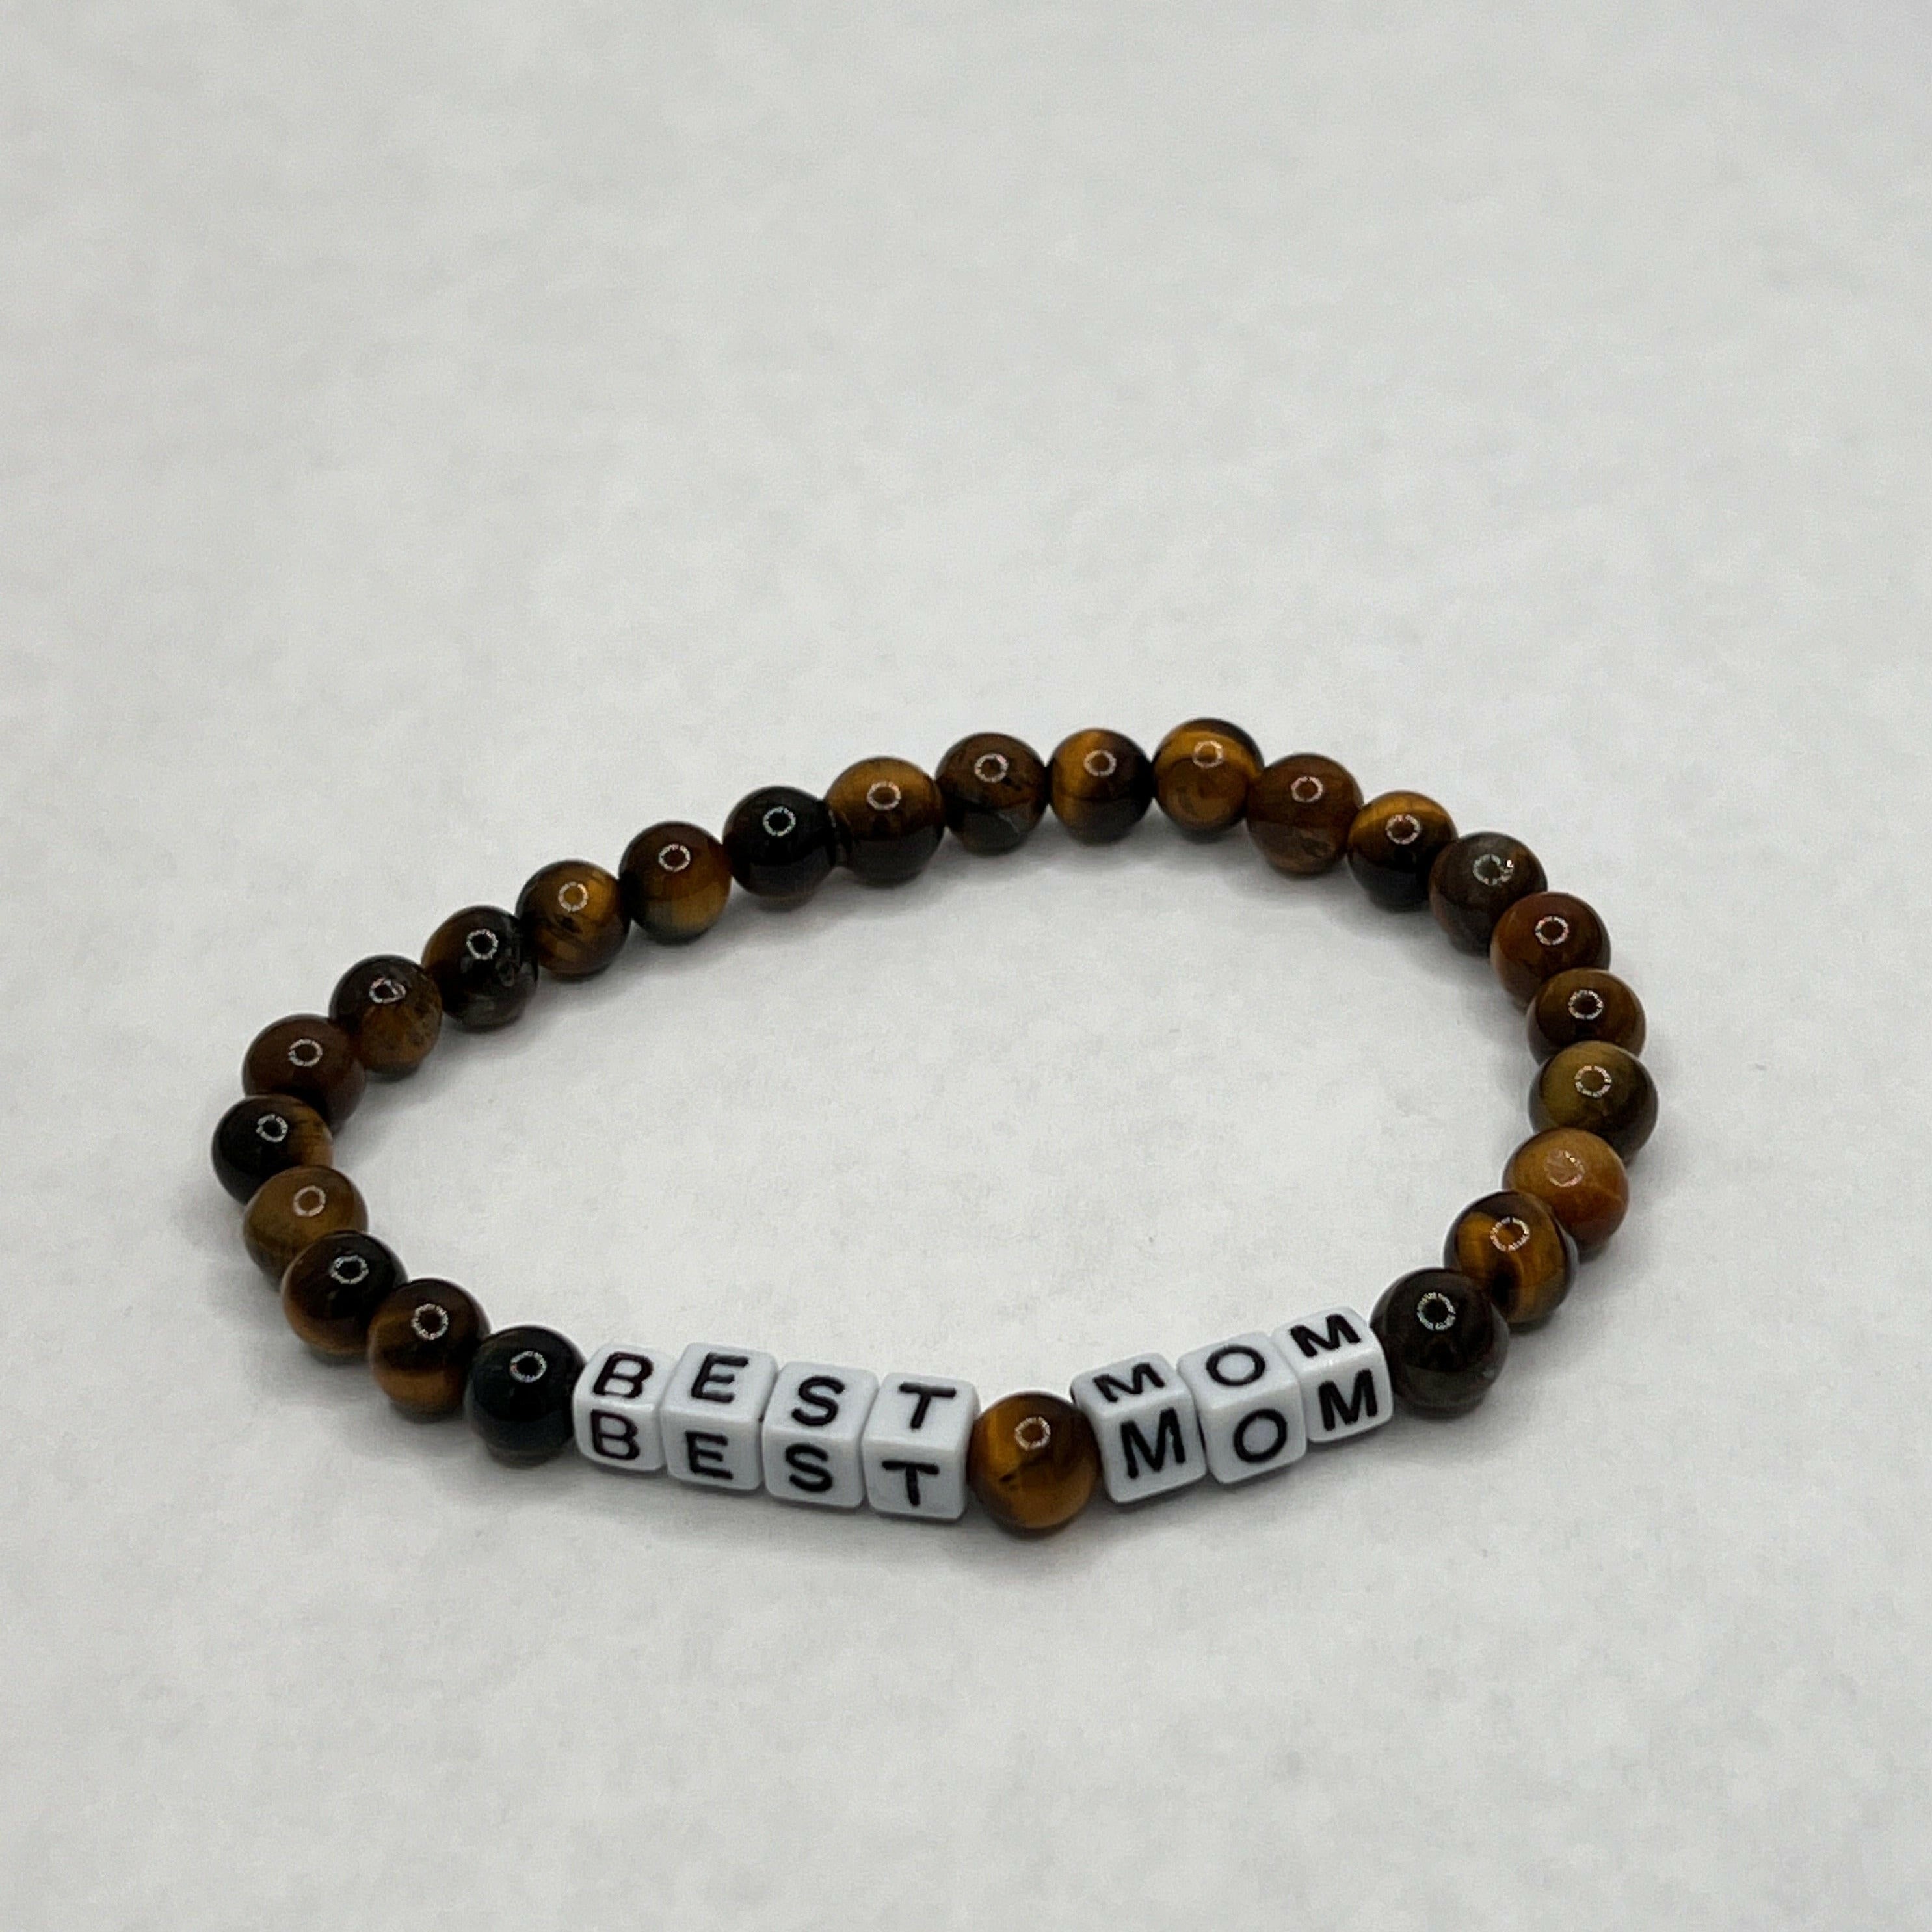 Customized gemstone bracelets for unique style statements